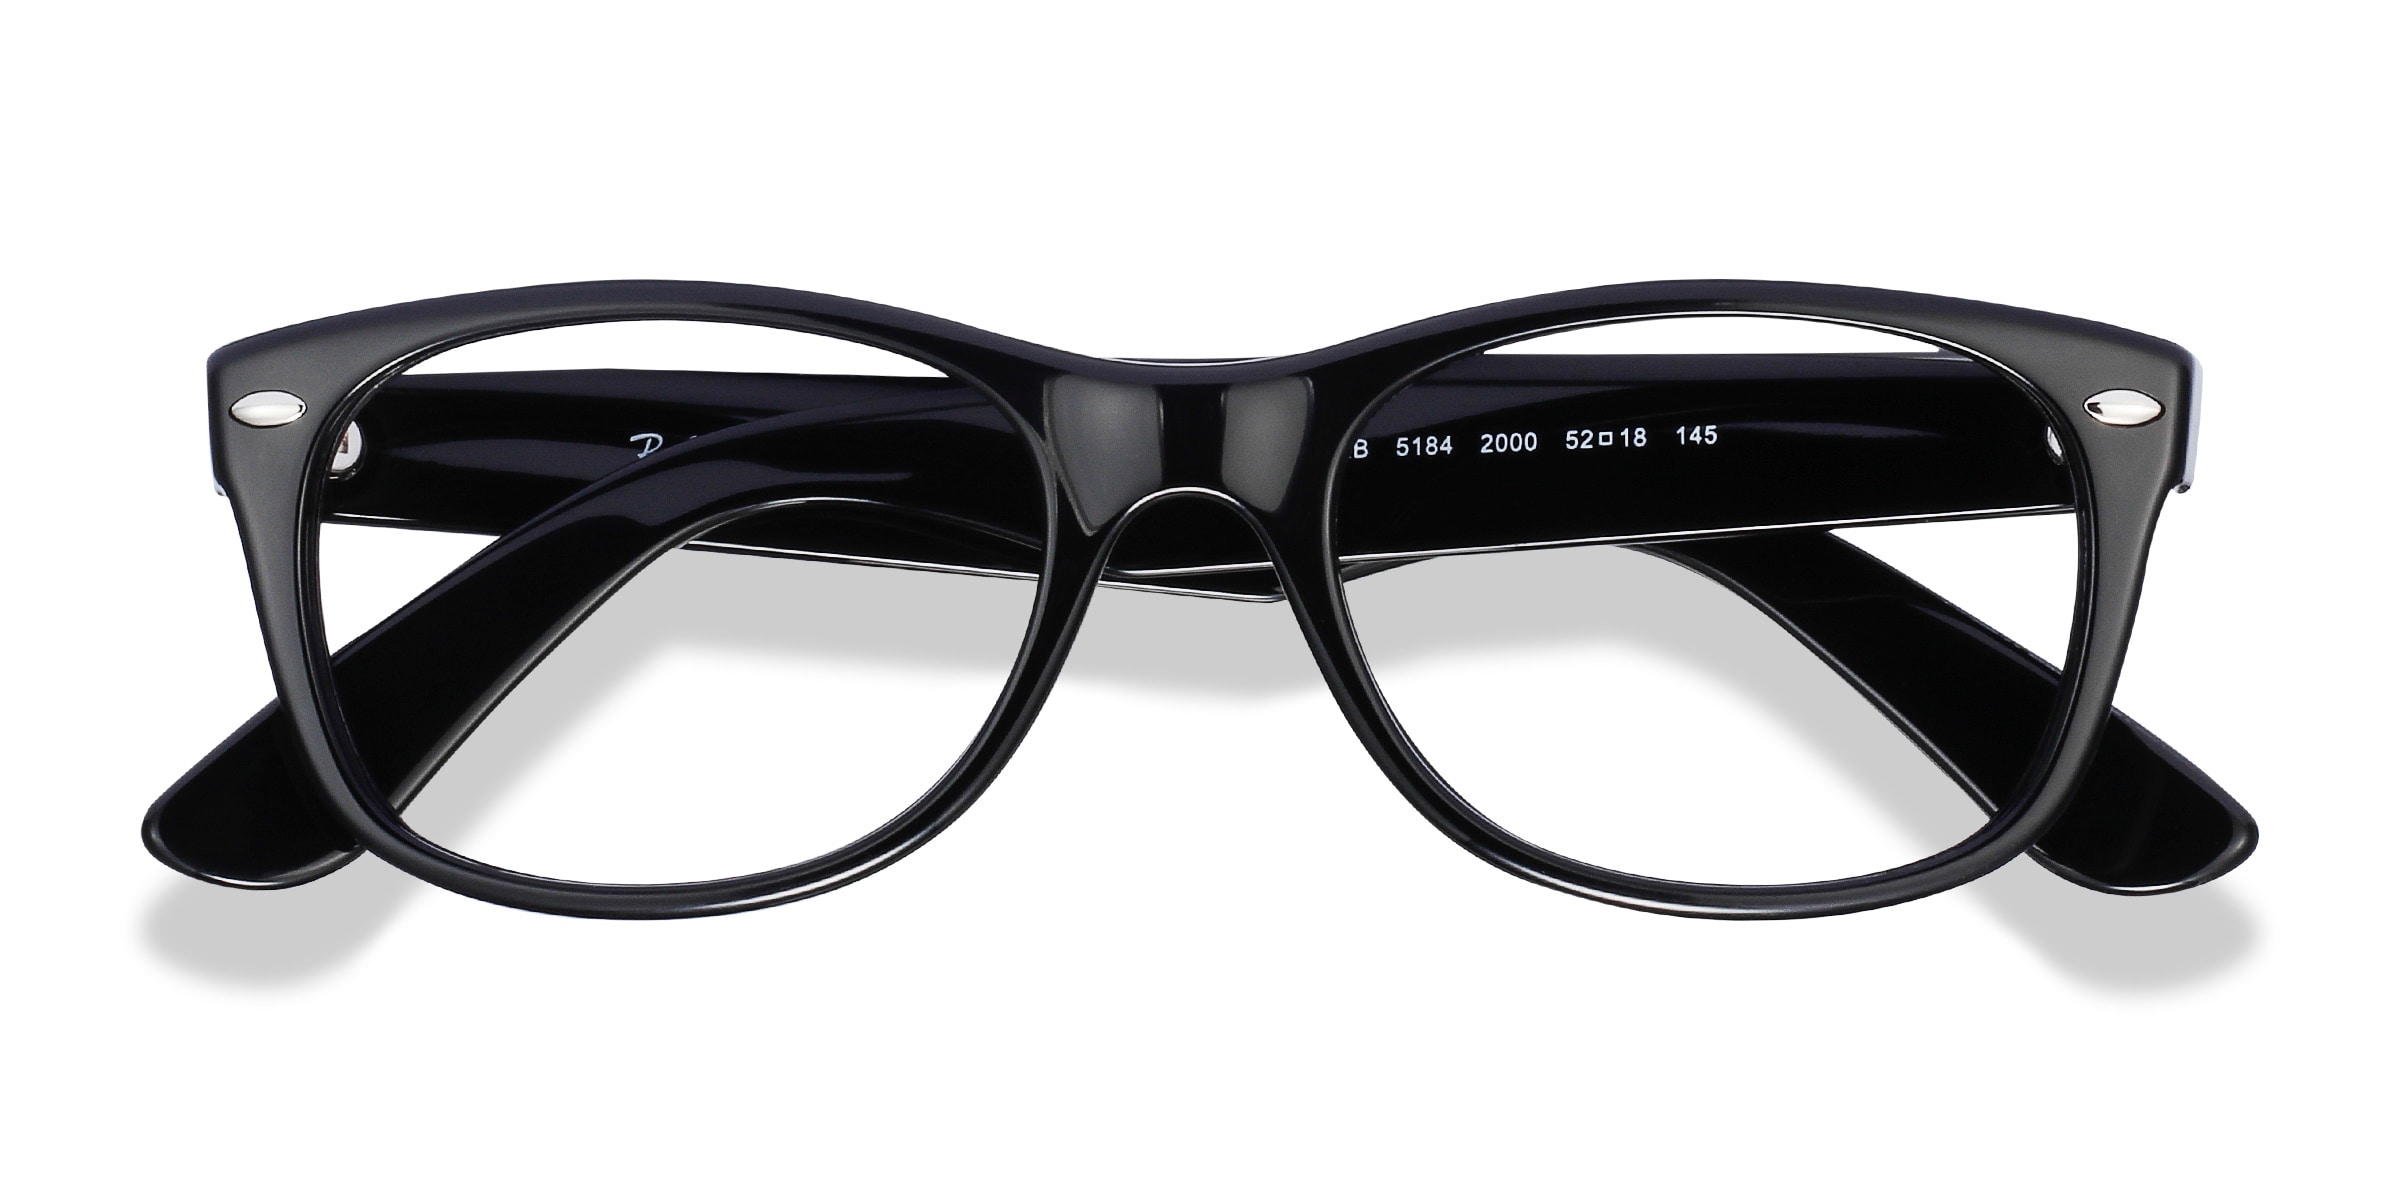 Ray-Ban RB5184 Wayfarer - Square Black Frame Eyeglasses